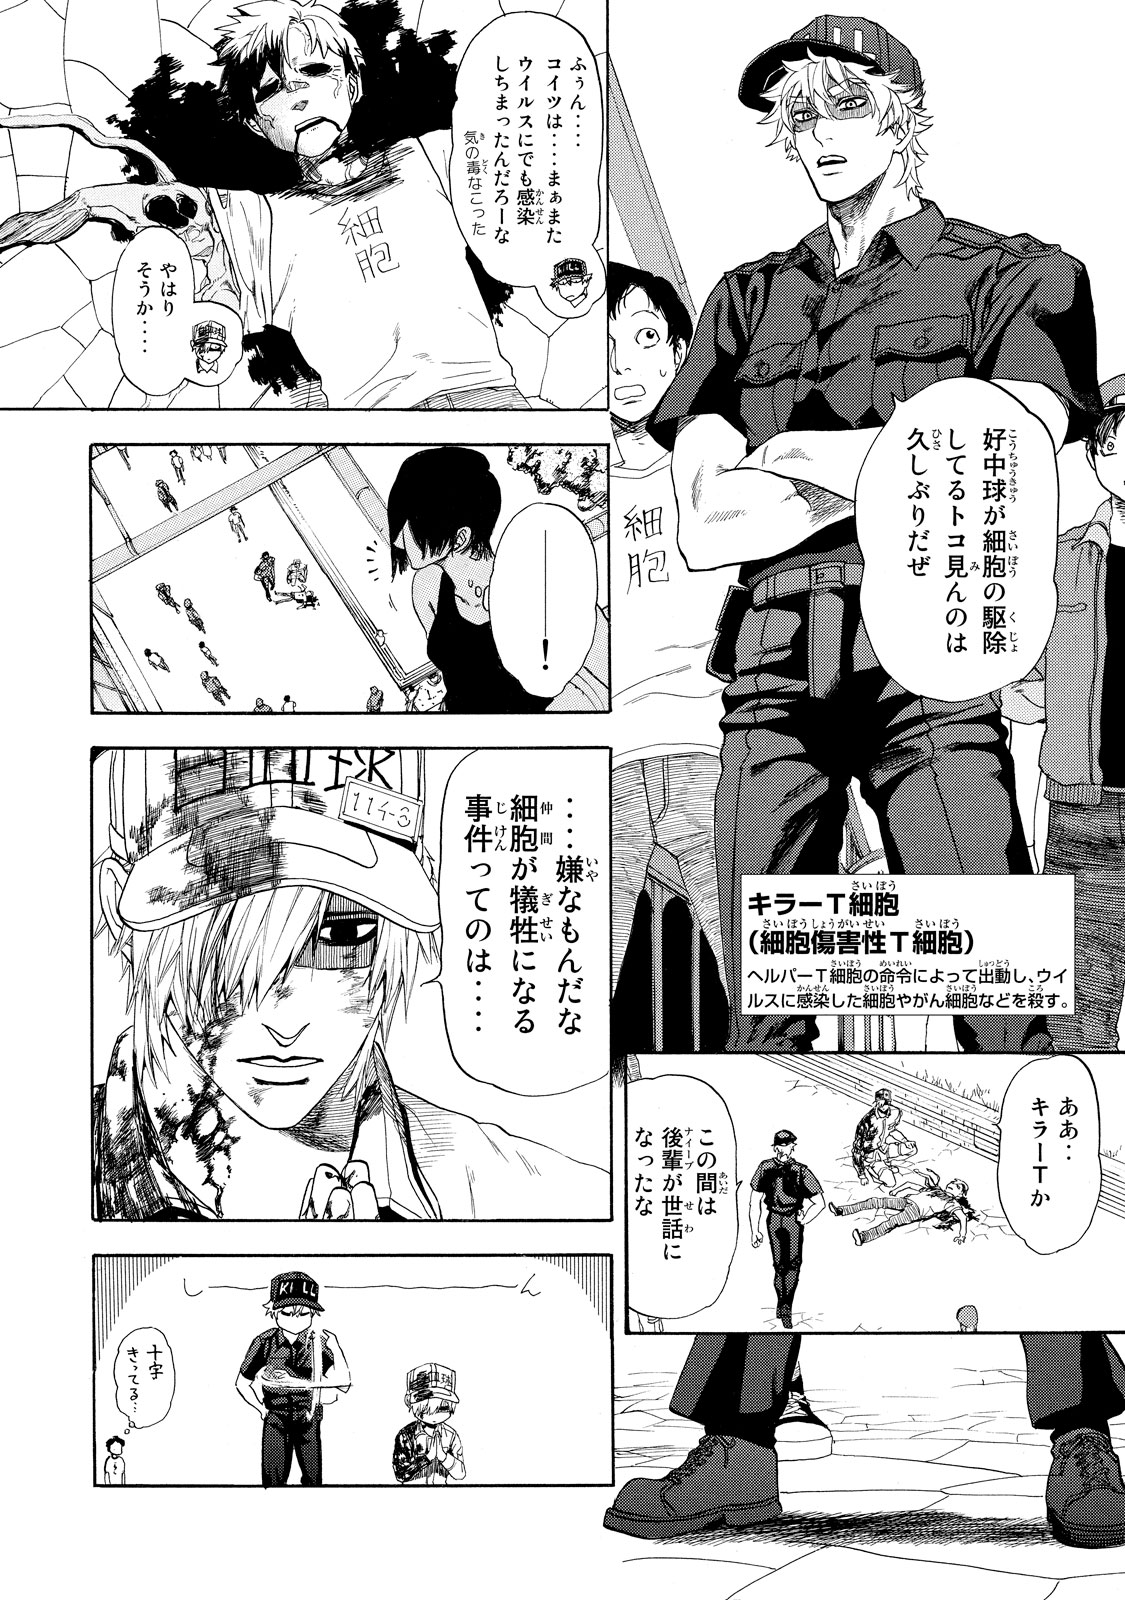 Hataraku Saibou - Chapter 8 - Page 4